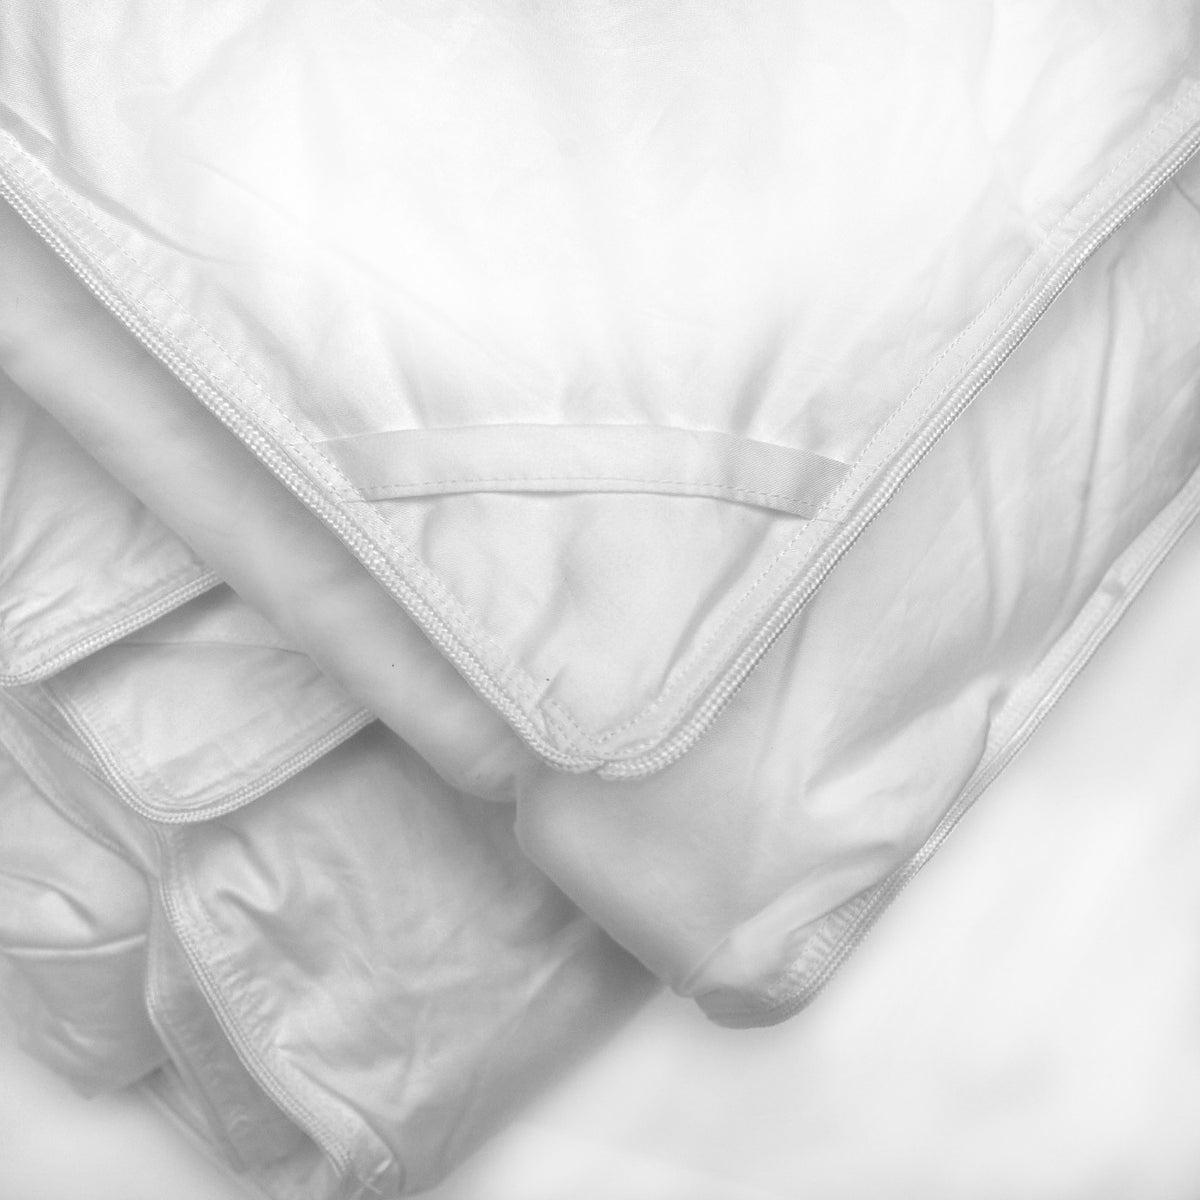 Corner Detail of Zippered Closure - Down Comforter Medium Weight - American Blanket Company